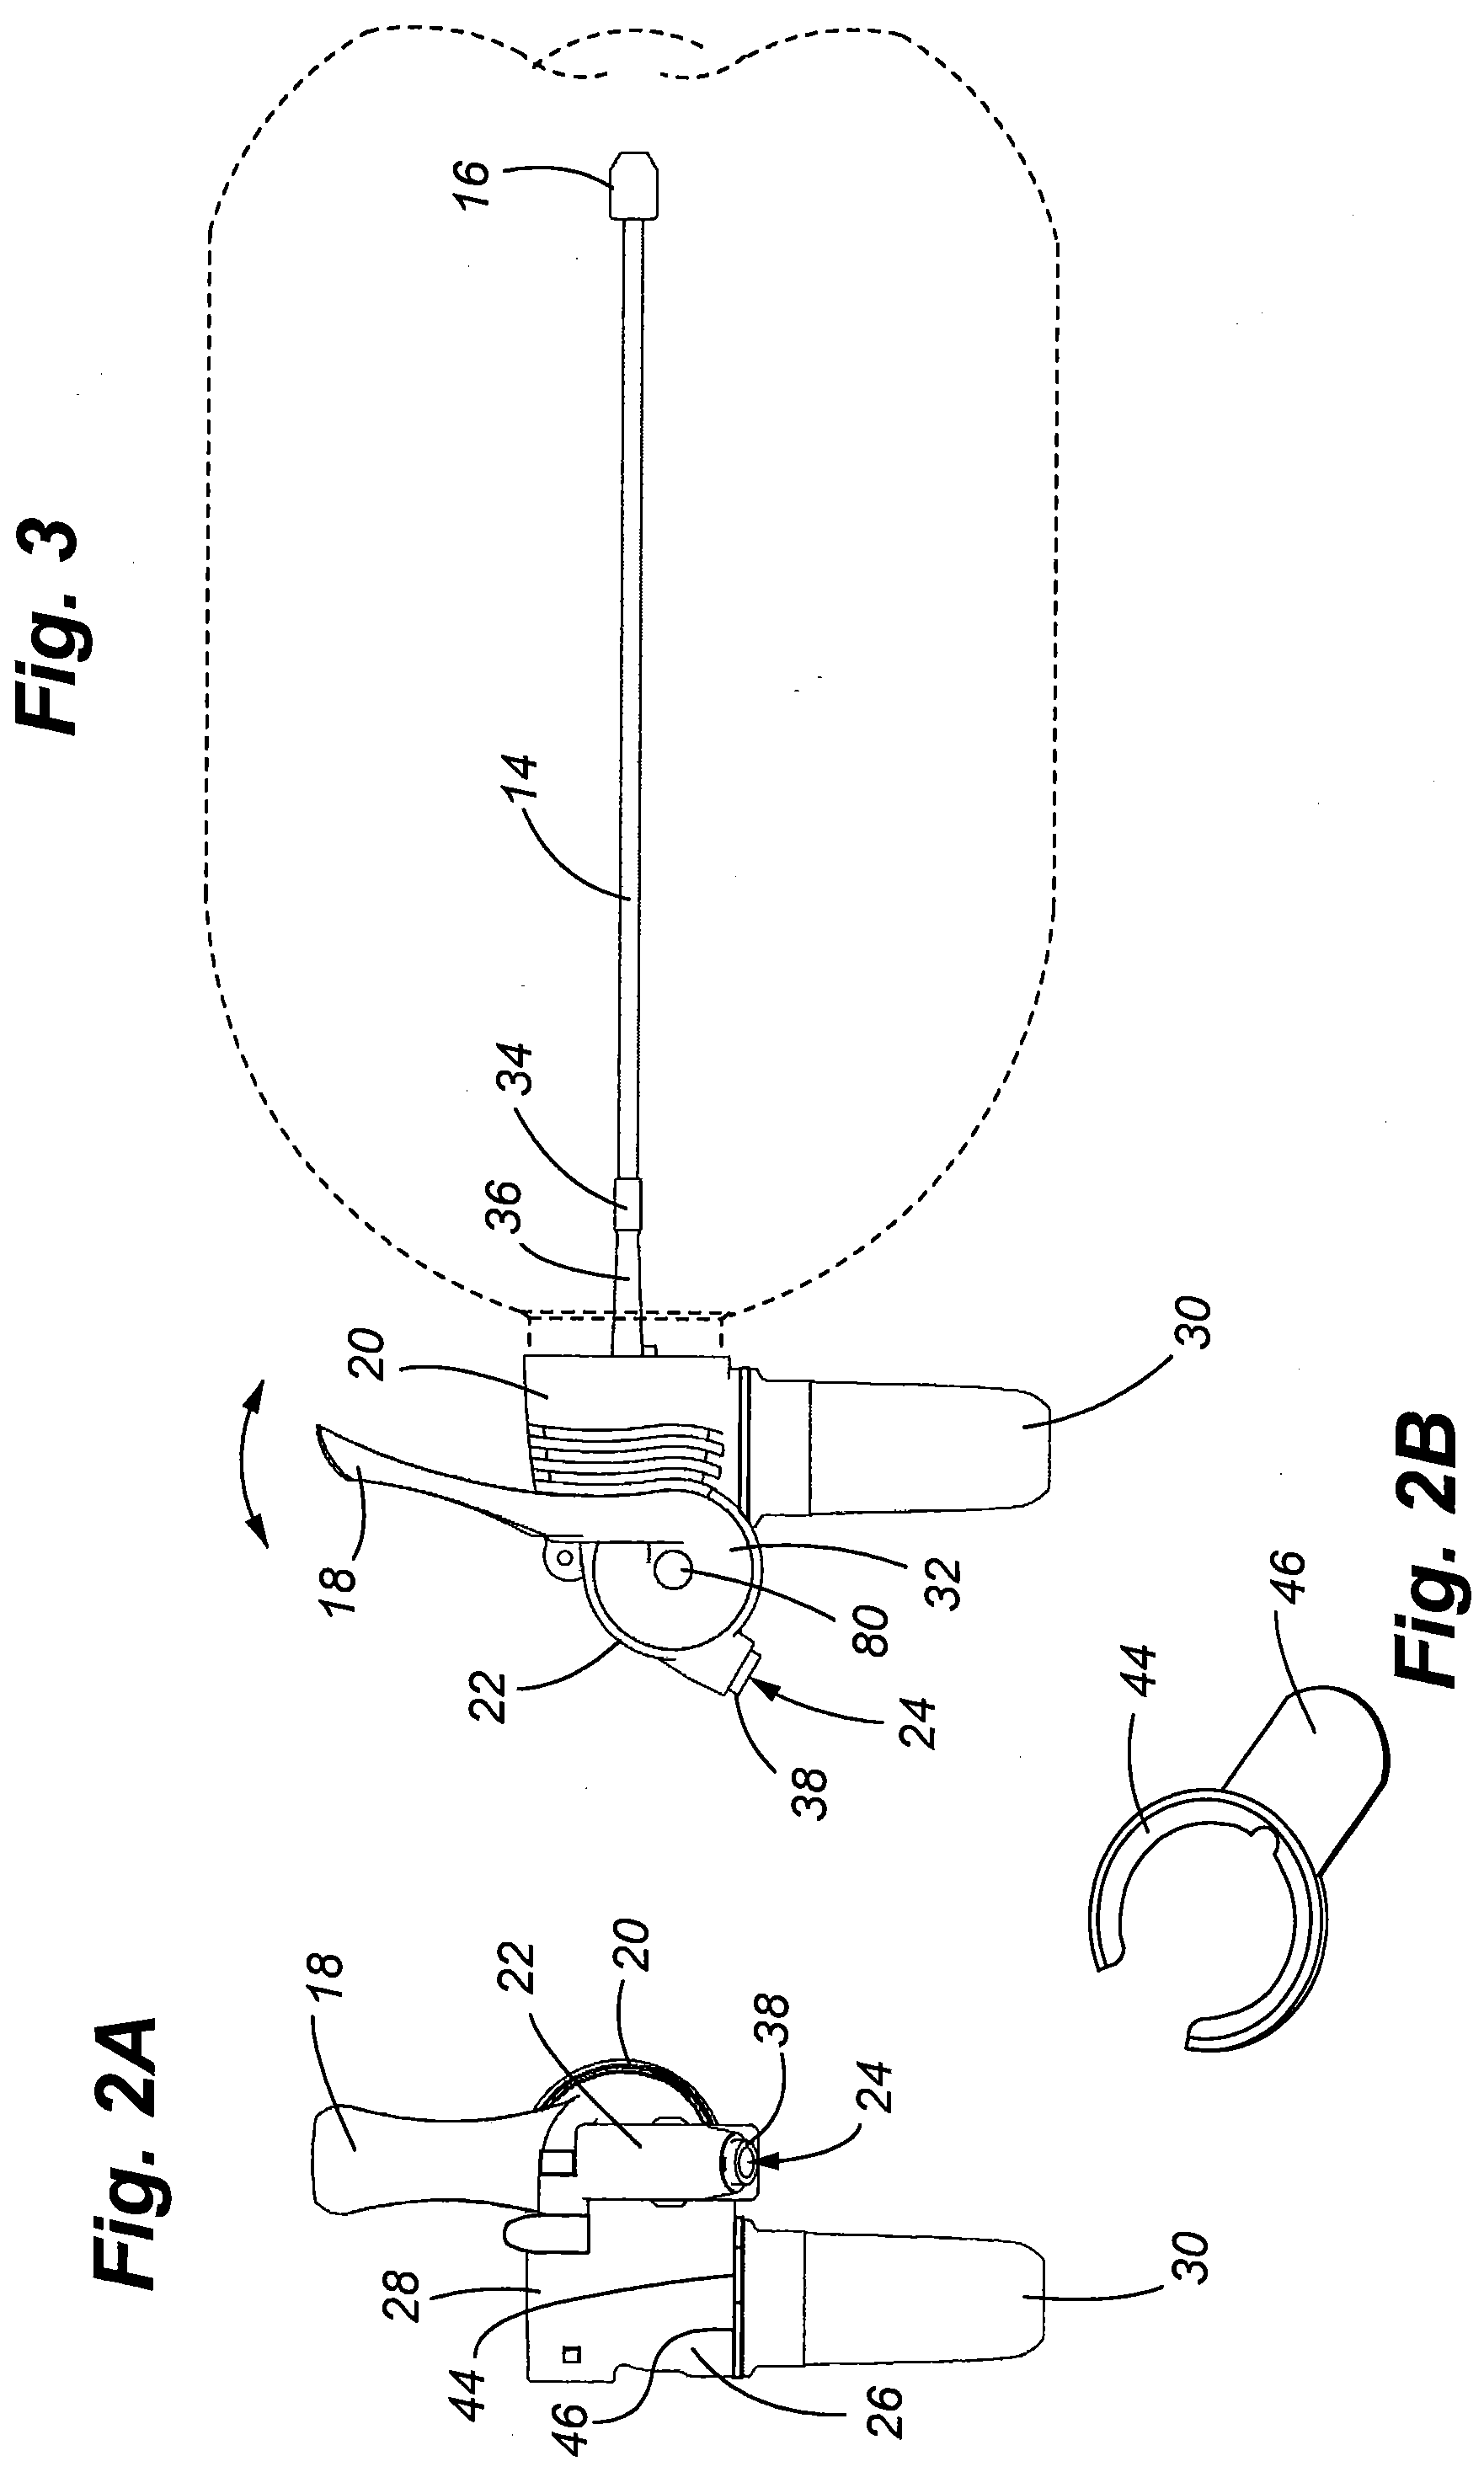 Modular constructed regulated fluid dispensing device